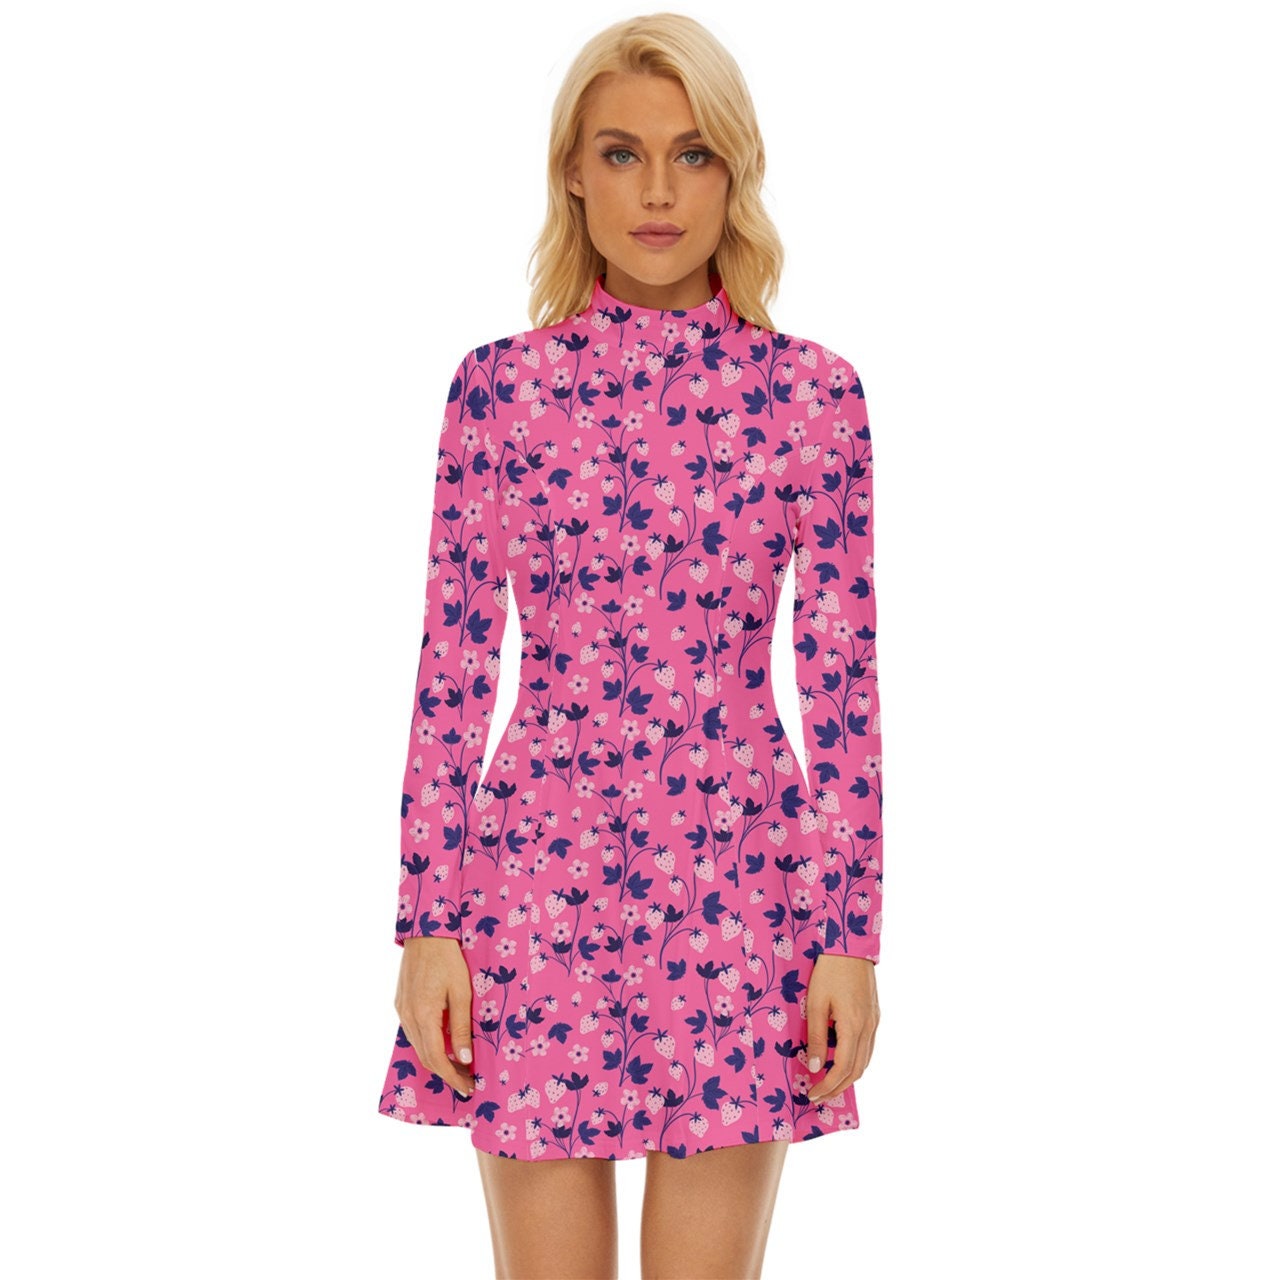 60er-Kleiderstil, Mod-Kleid, rosa Mod-Kleid, Erdbeerkleid, Rollkragenkleid, GOGO-Kleid, Kleid im 60er-Jahre-Stil, 60er-Minikleid, Retro-Kleid